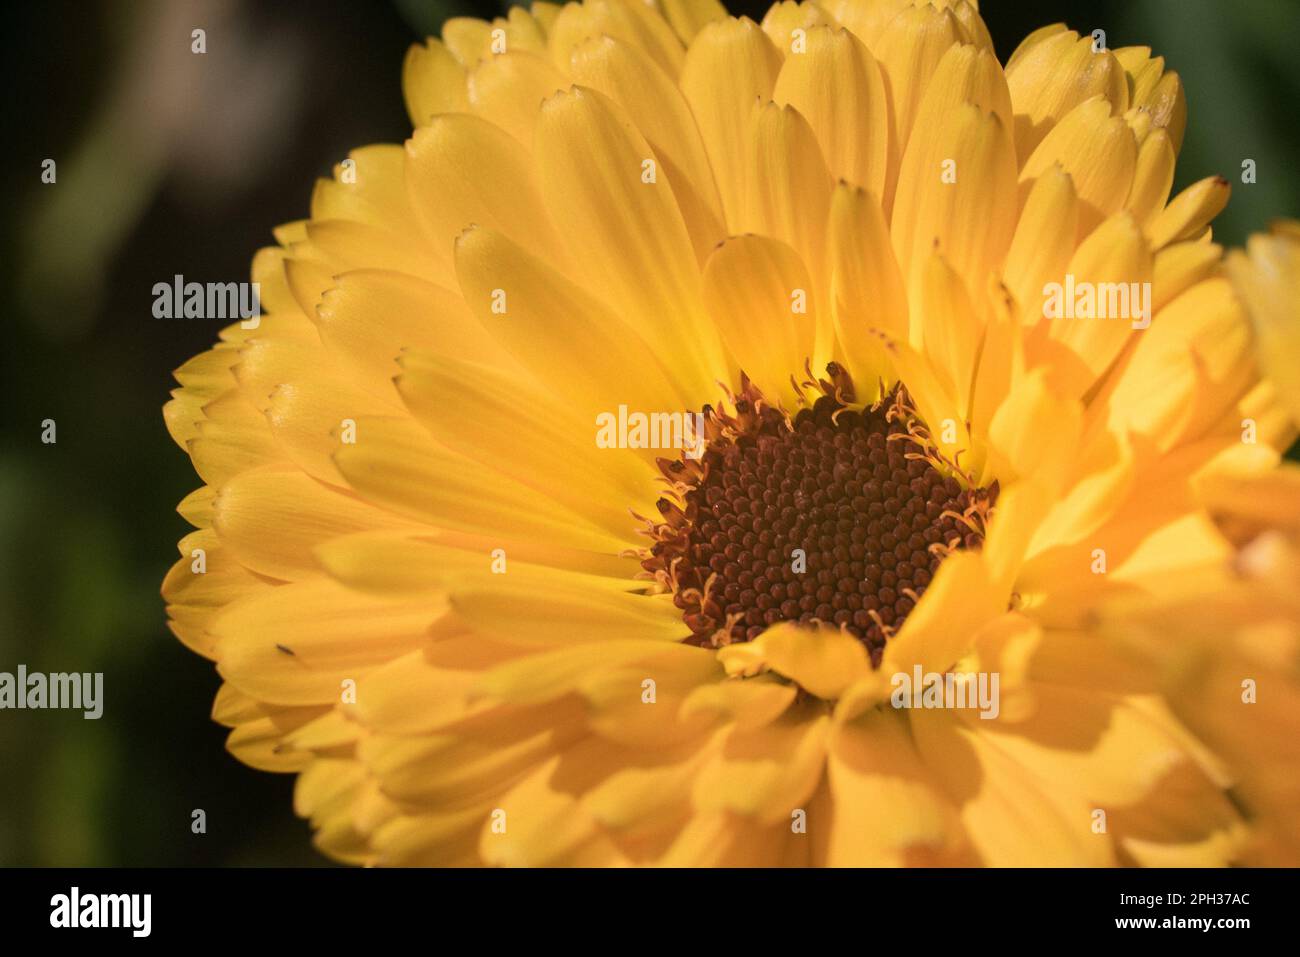 yellow daisy close up with black eye Stock Photo